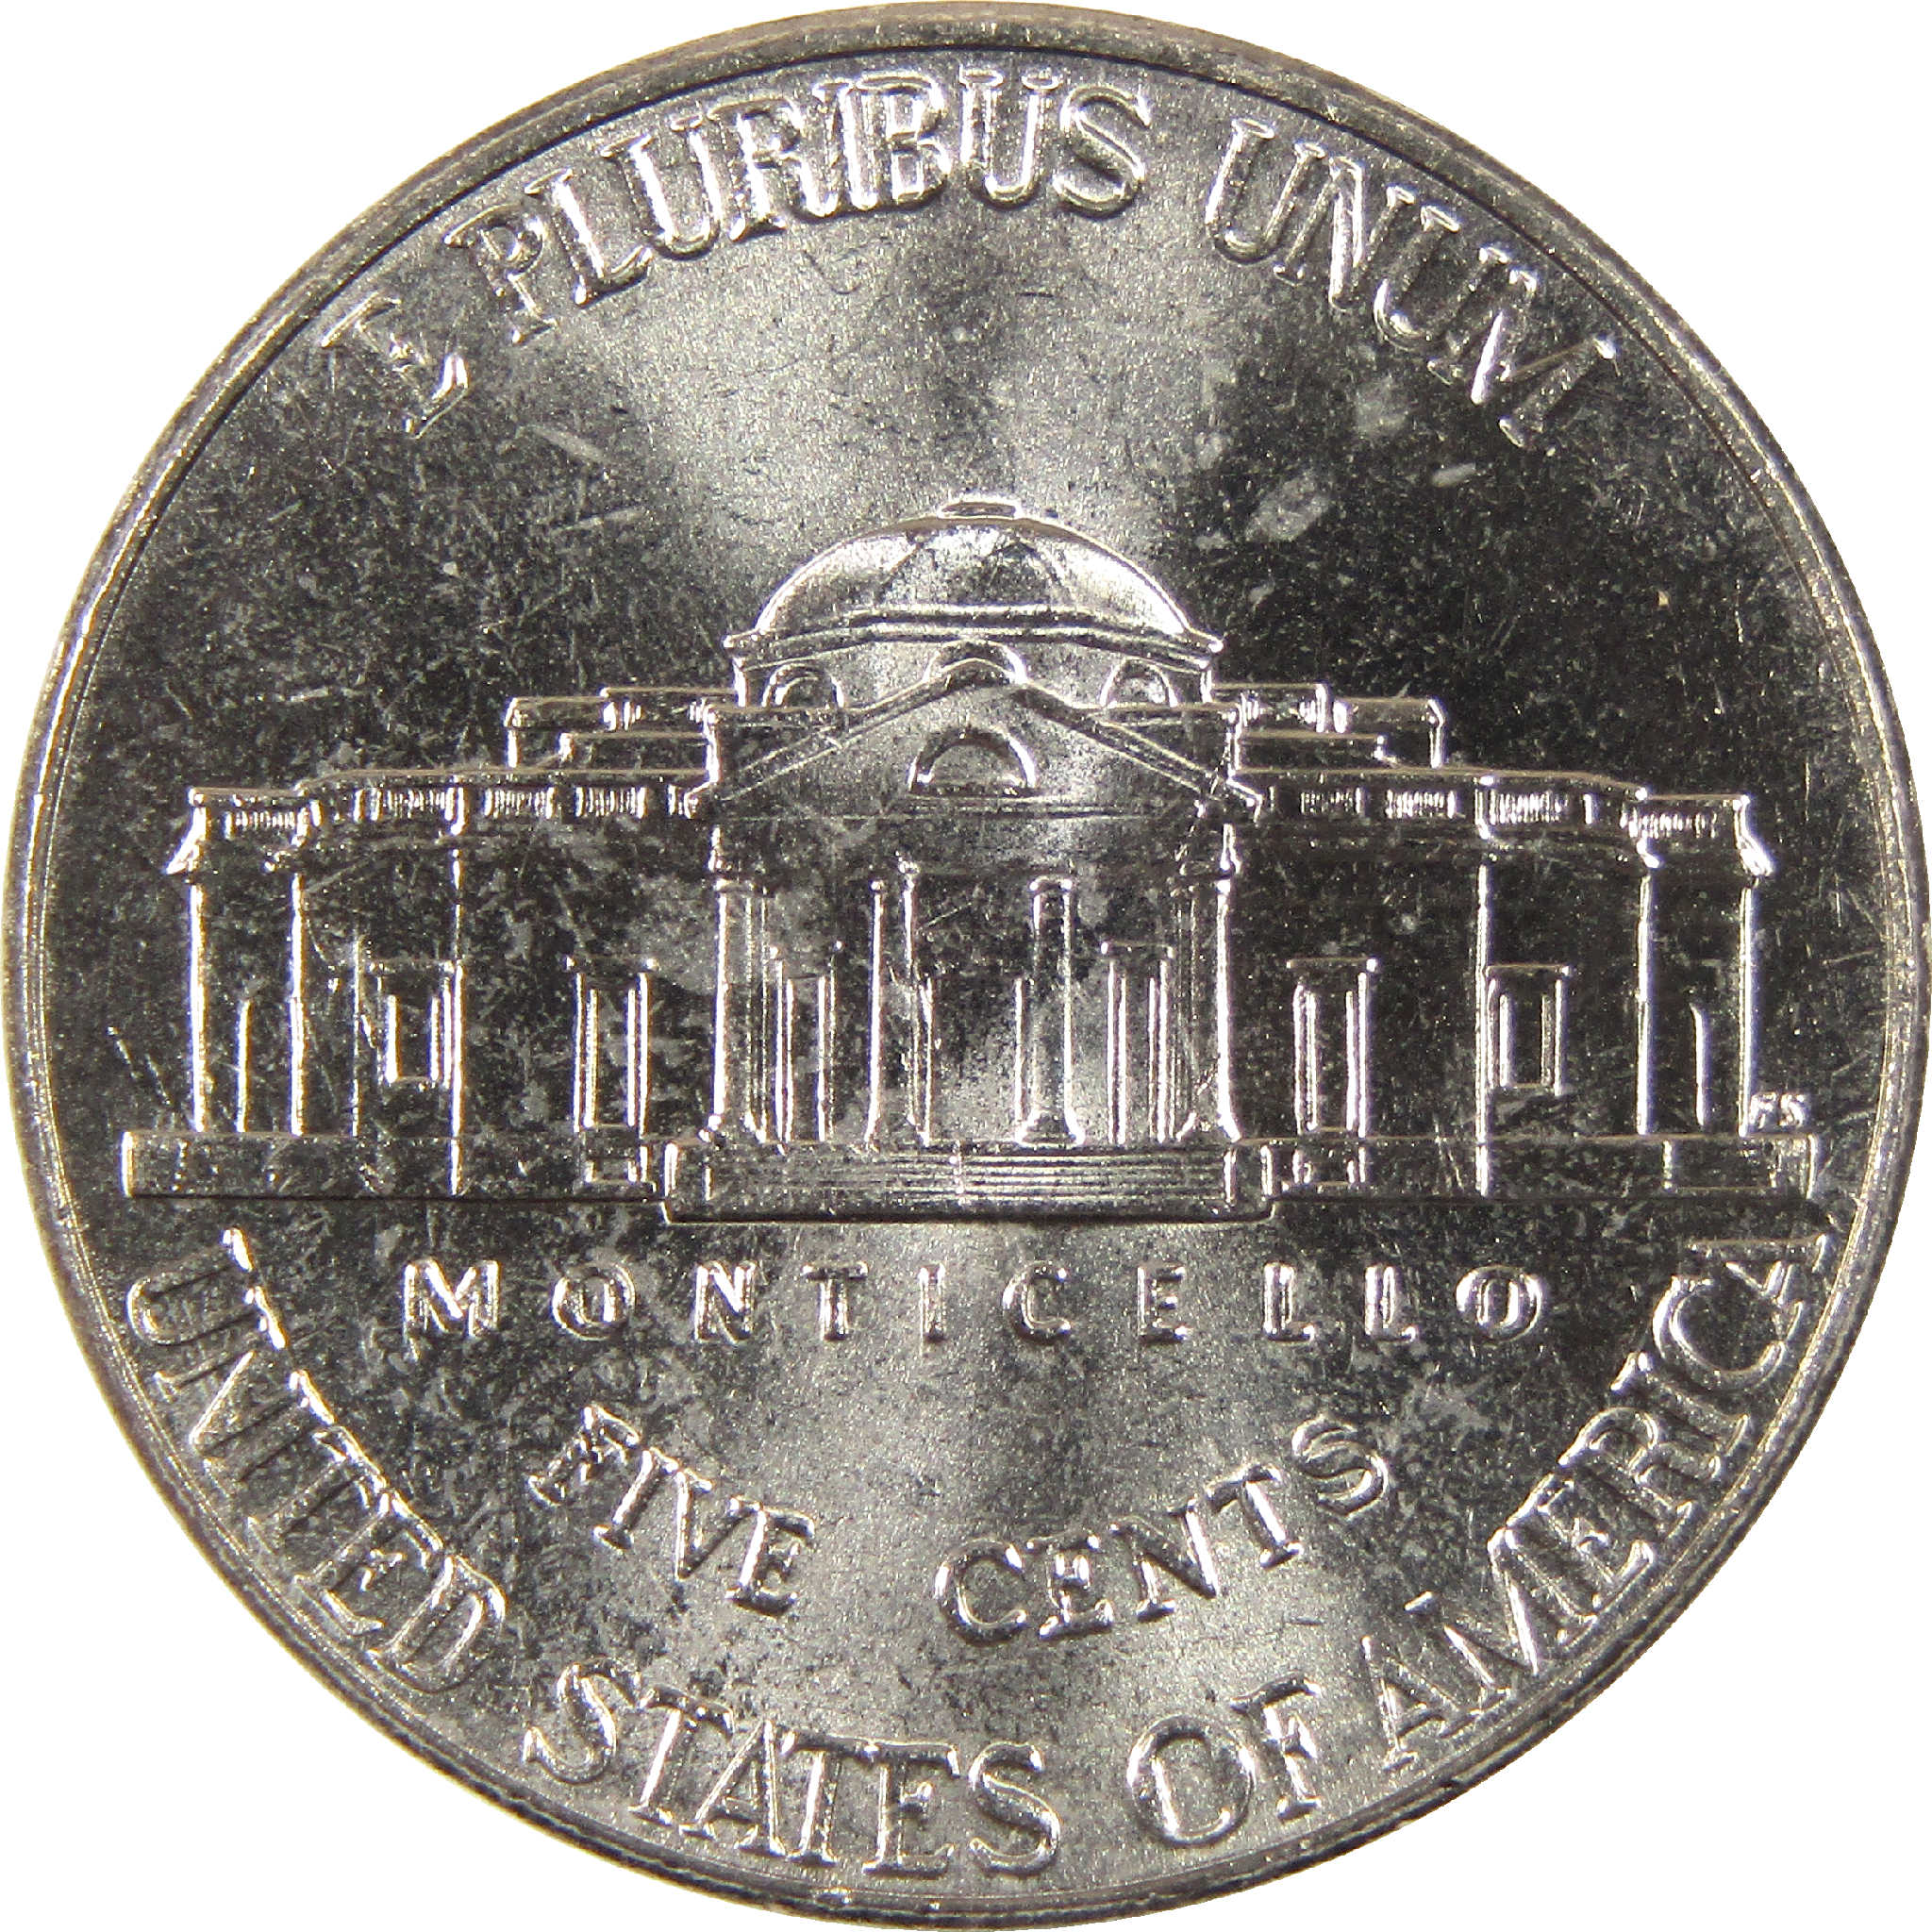 2010 D Jefferson Nickel BU Uncirculated 5c Coin